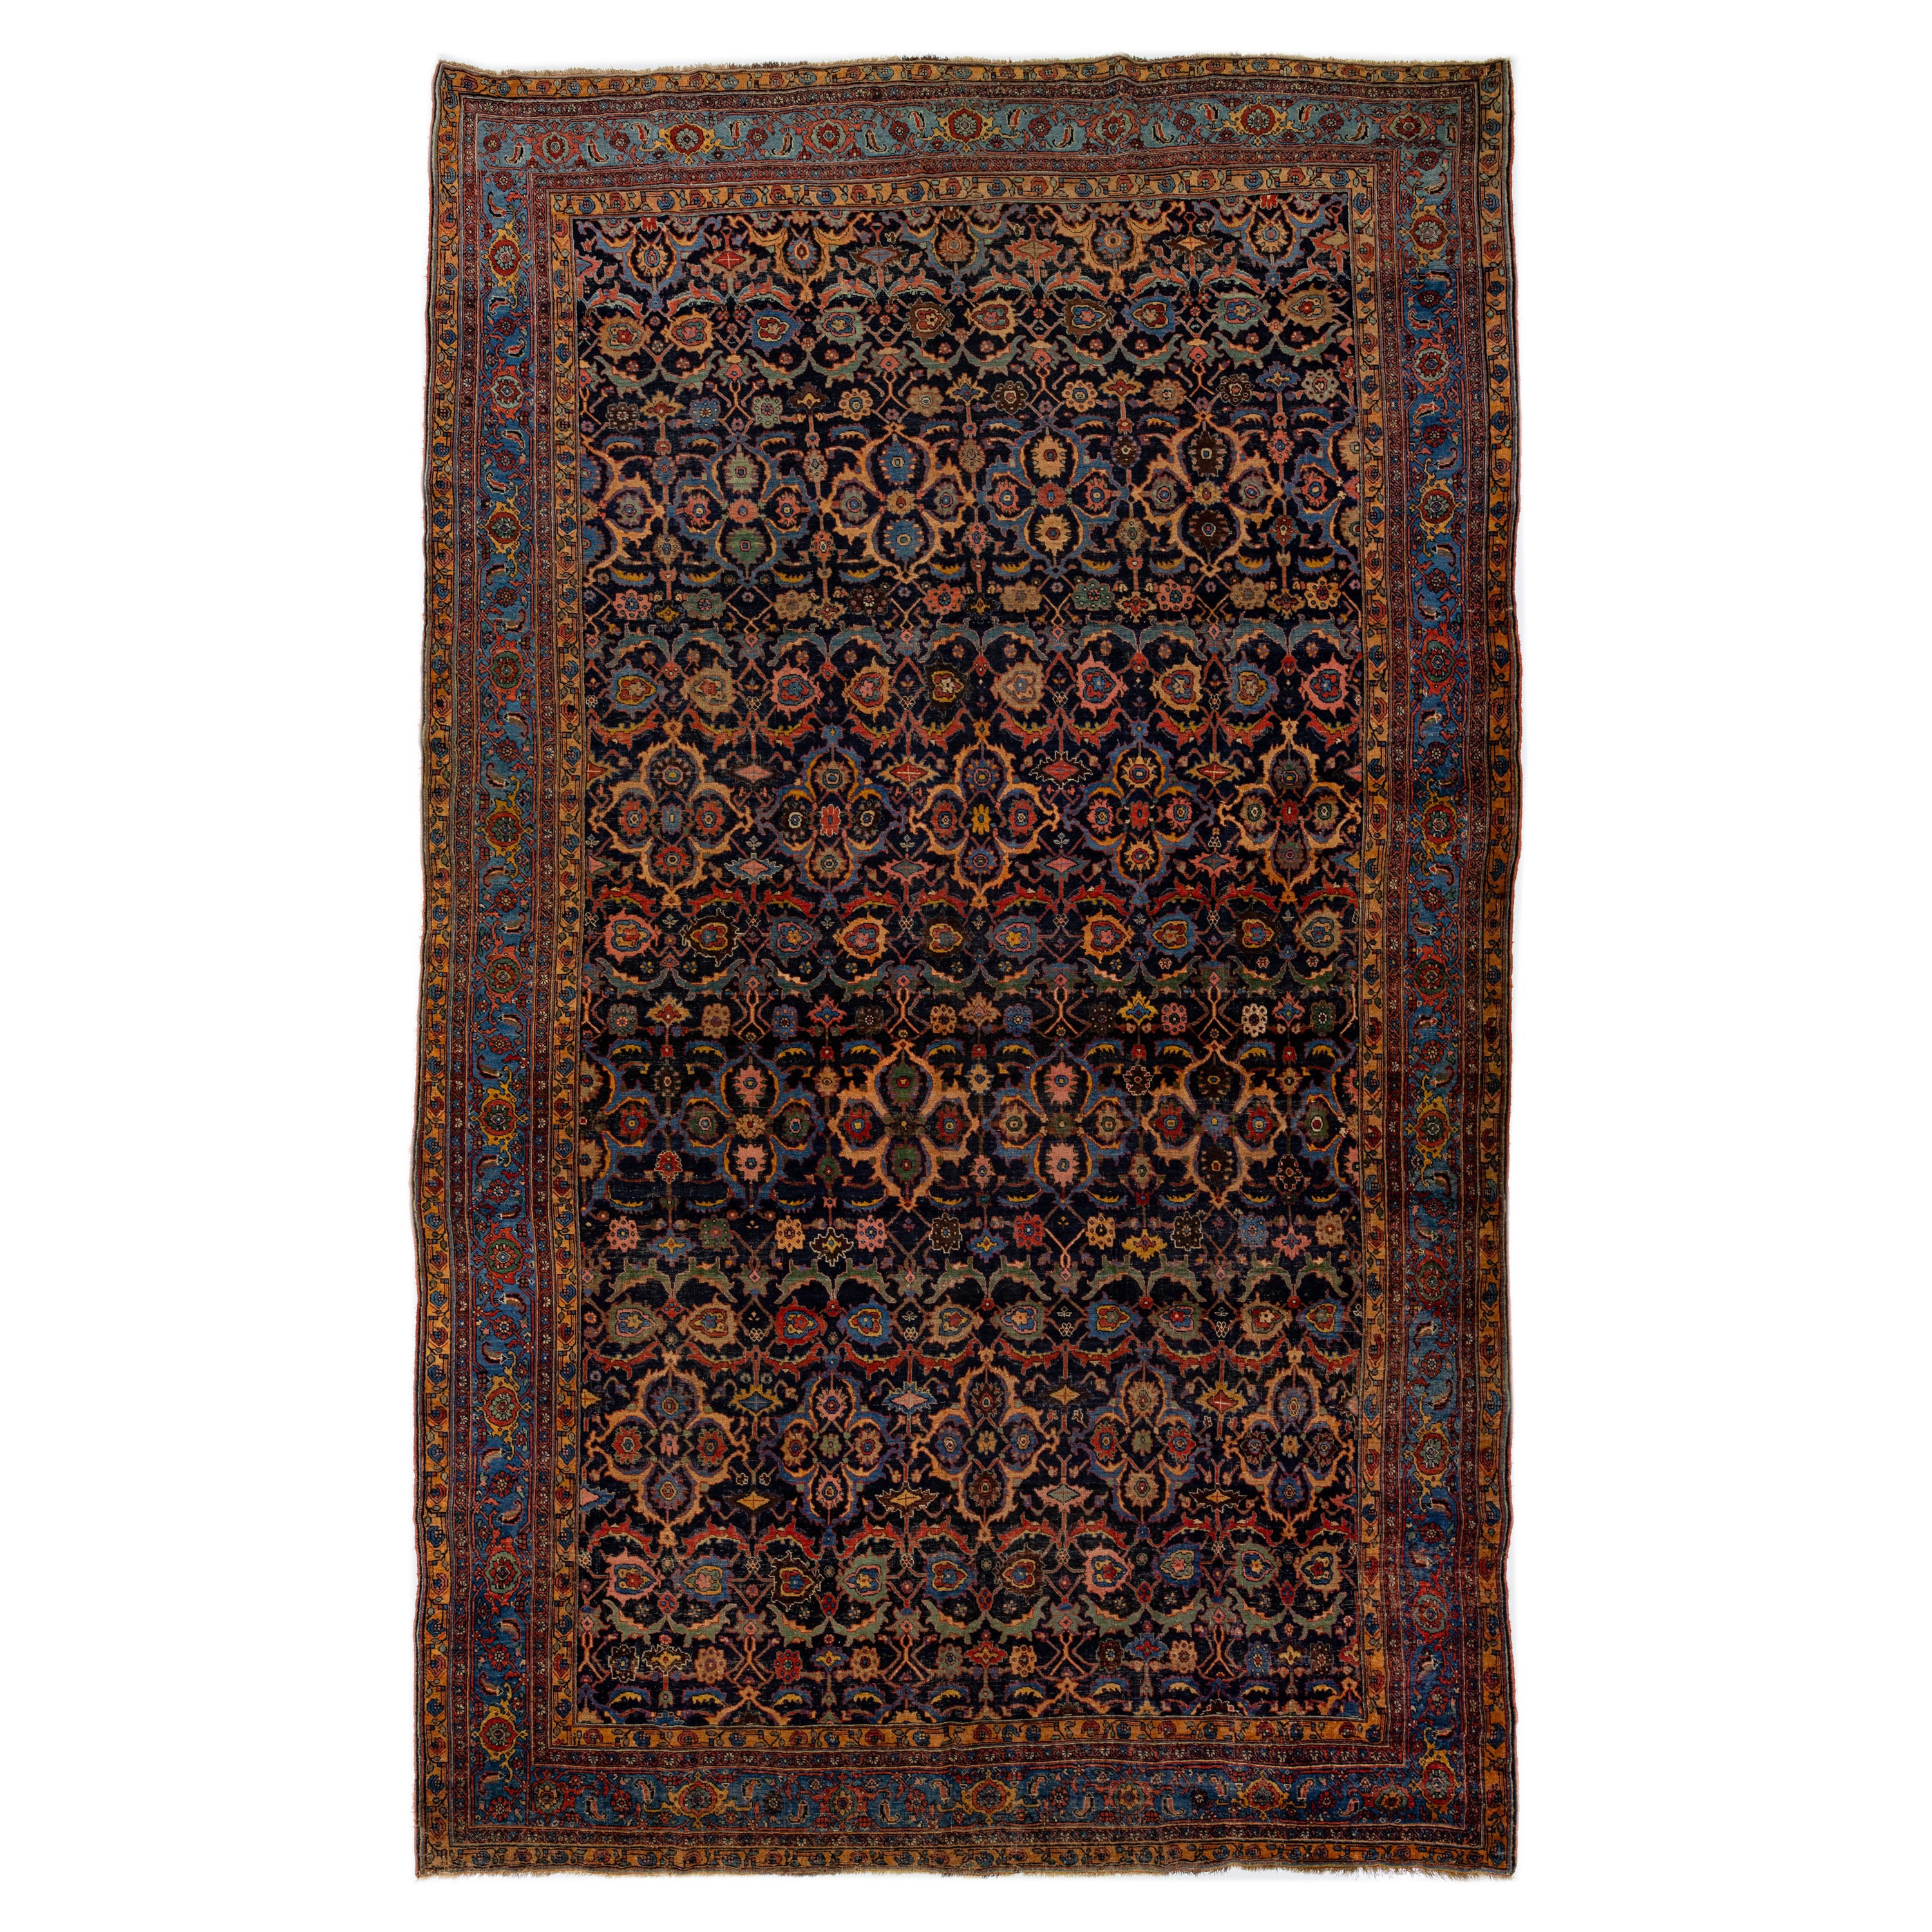  Oversize Antique Bidjar Handmade Wool Rug in Dark Blue with Allover Design For Sale